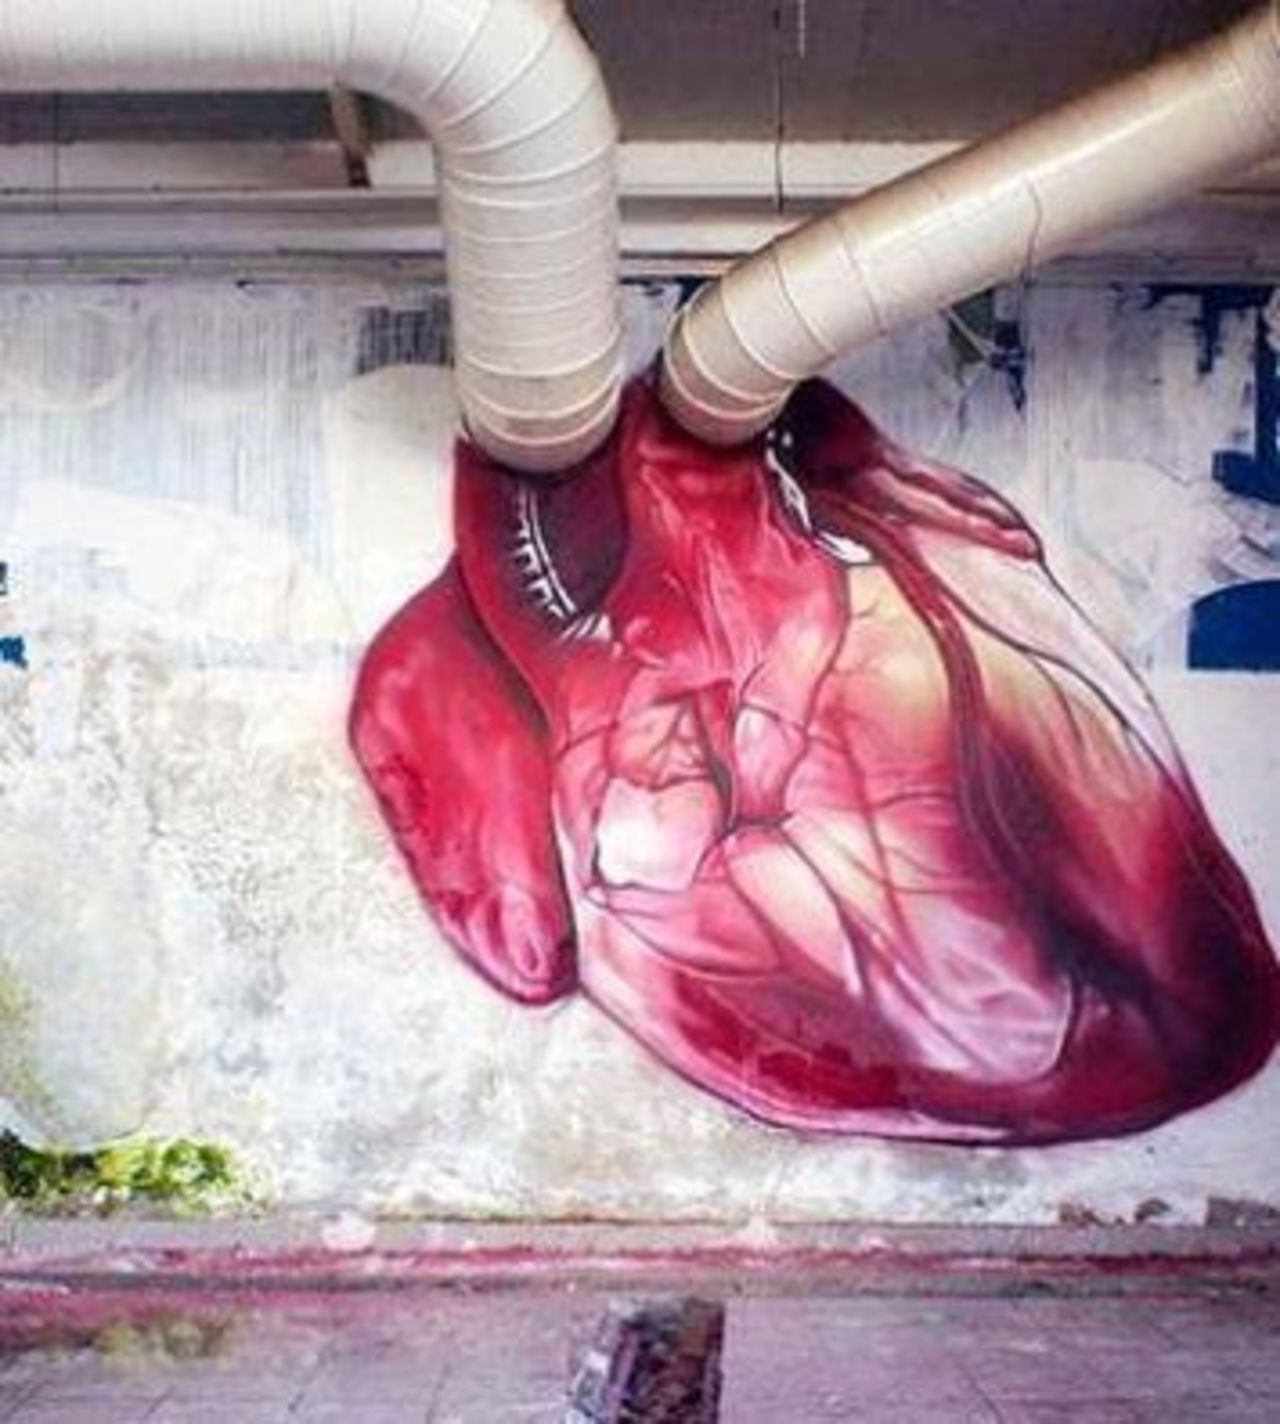 #Heart – Creative #Streetart | Be ▲rtist - Be ▲rt https://beartistbeart.com/2016/08/22/heart-creative-streetart/?utm_campaign=crowdfire&utm_content=crowdfire&utm_medium=social&utm_source=twitter https://t.co/ZN5MWlWpza